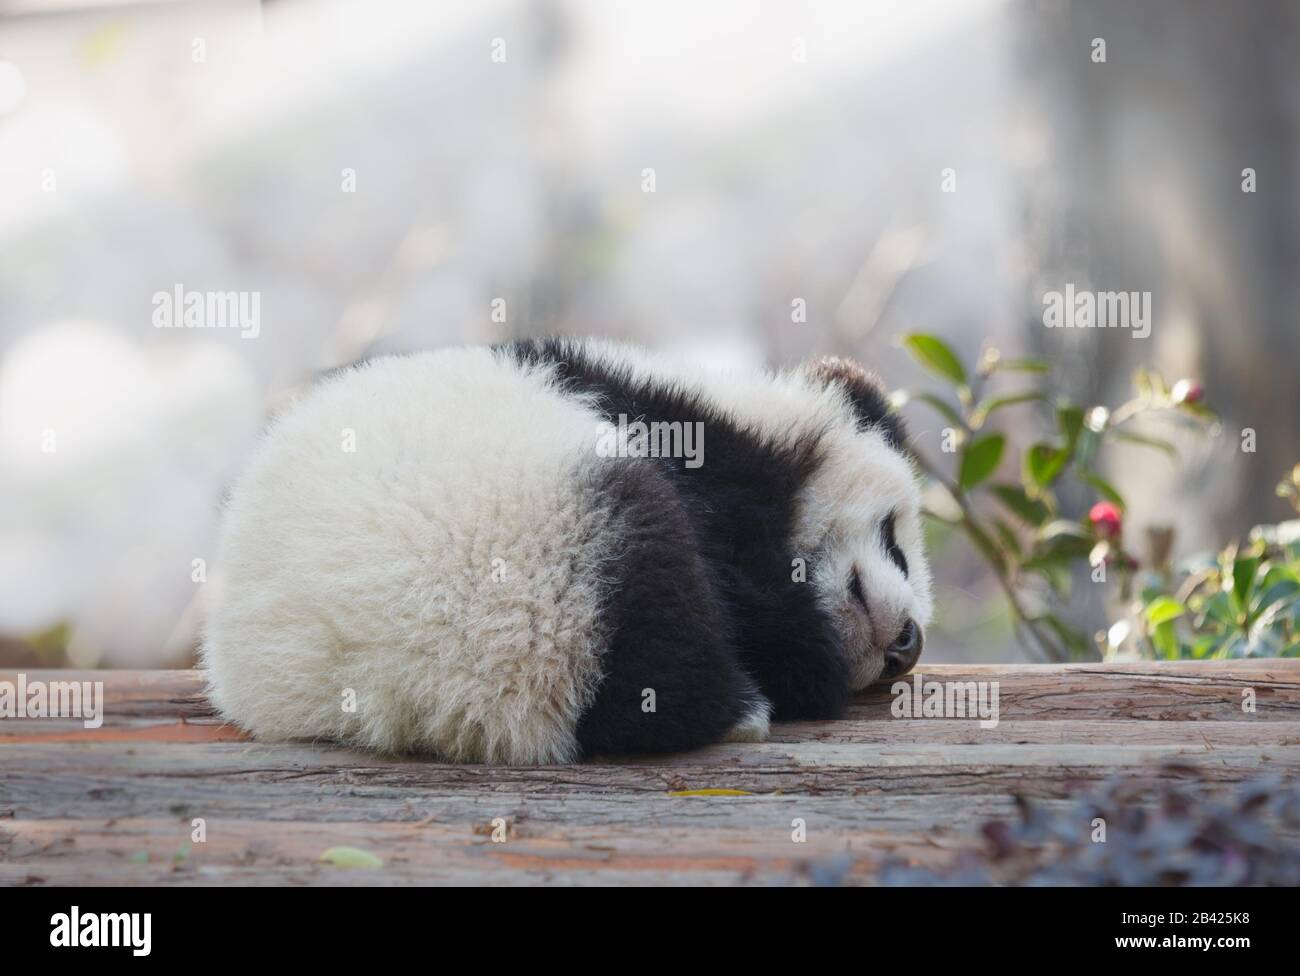 A baby panda lies sleeping Stock Photo